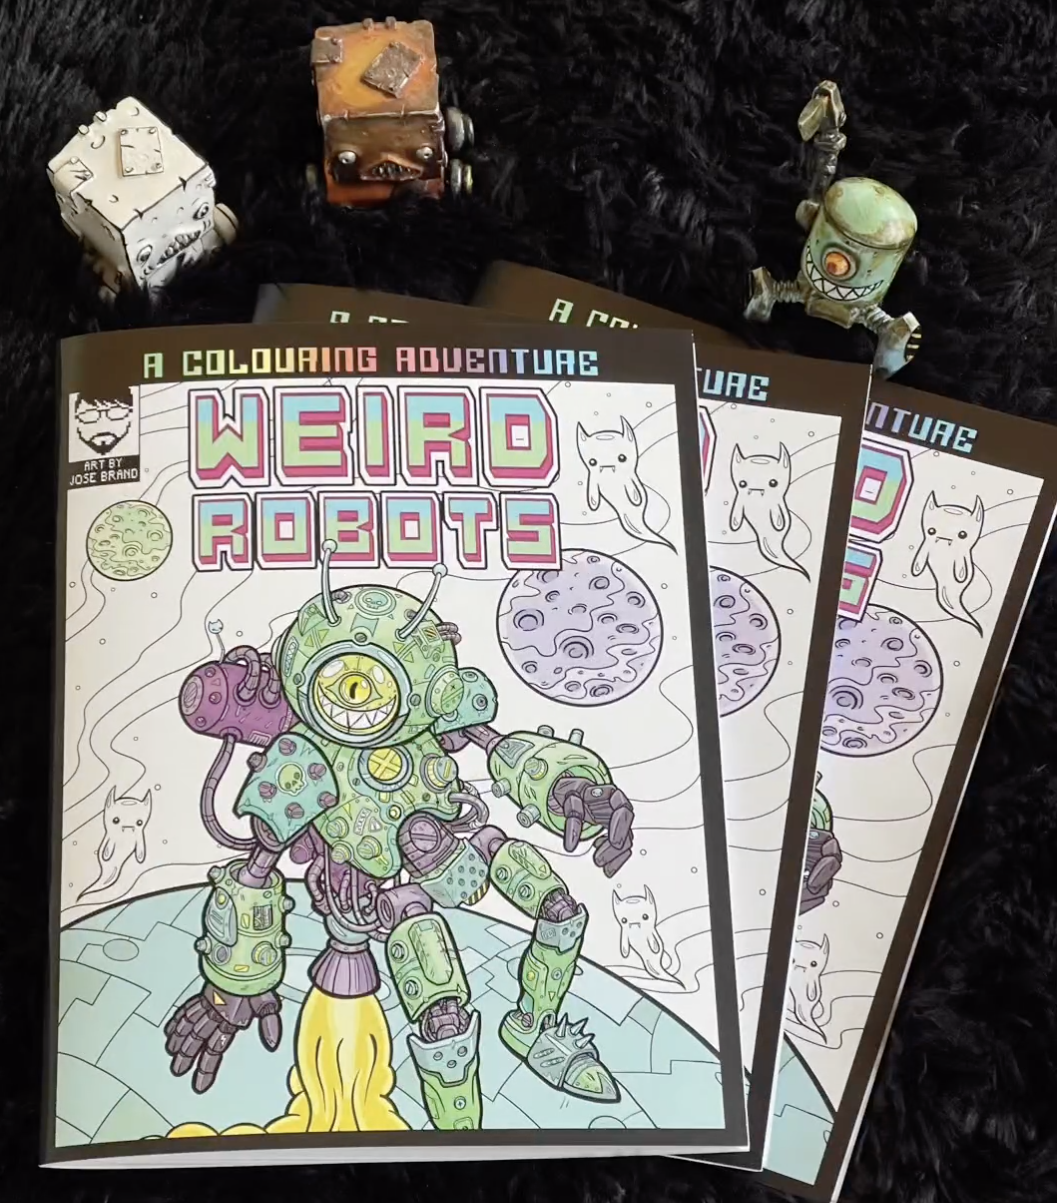 Weird Robots: A Colouring Adventure by Jose Brand